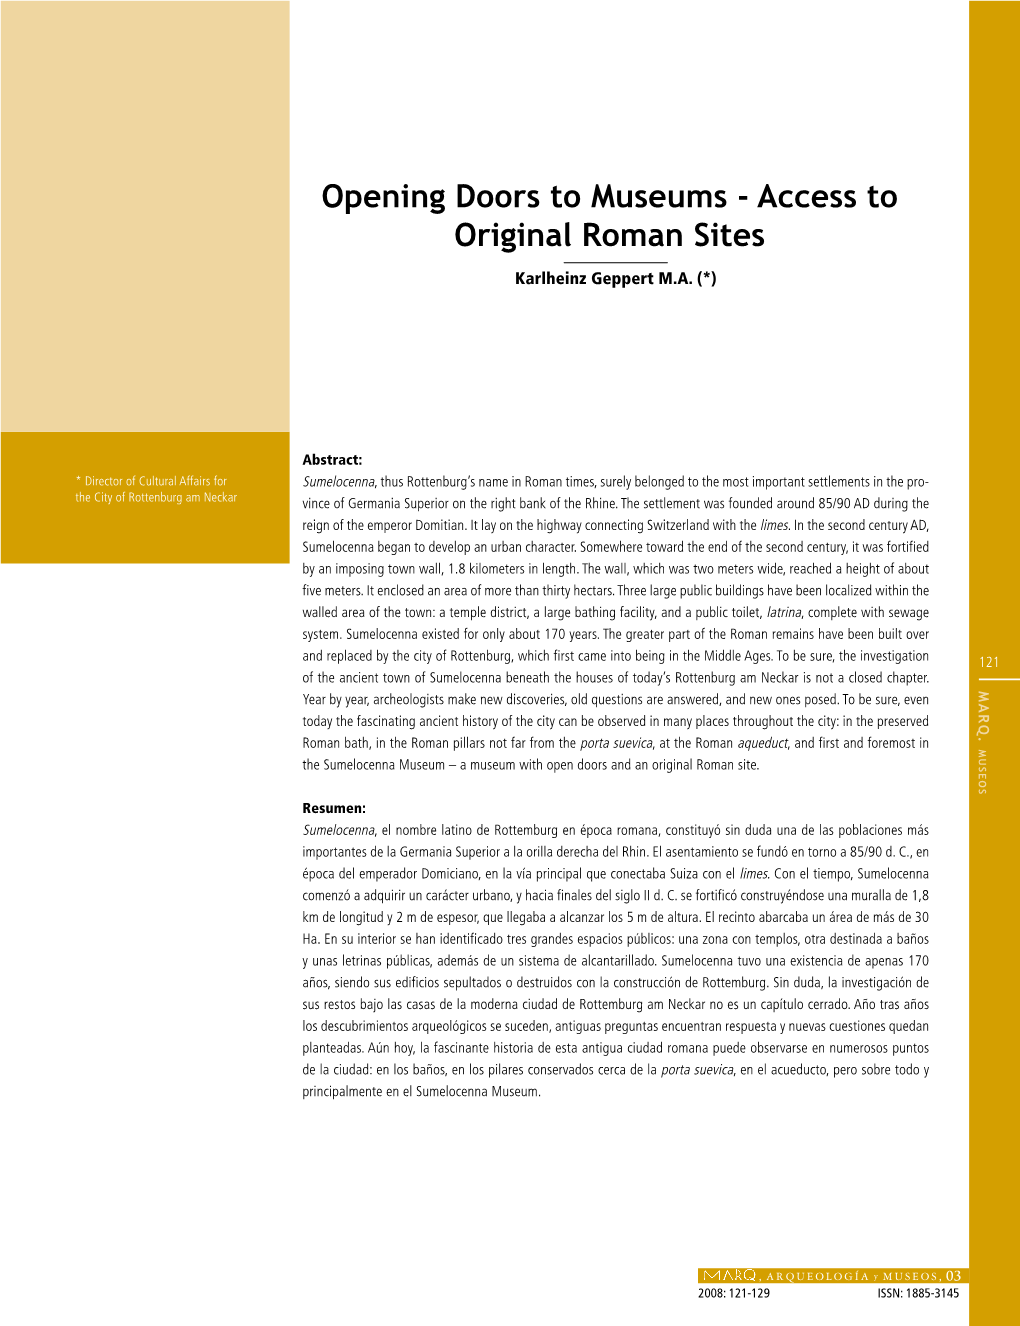 Opening Doors to Museums - Access to Original Roman Sites Karlheinz Geppert M.A